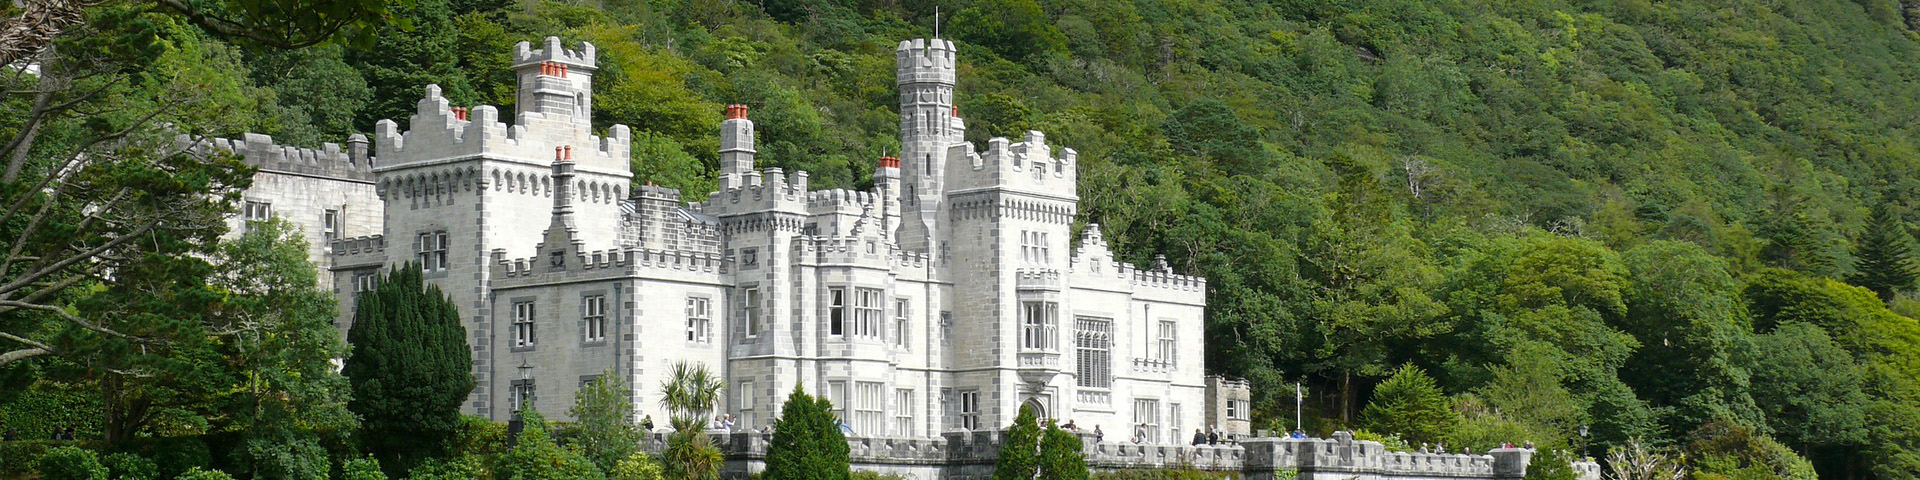 Castle in Ireland for Brandywine Global